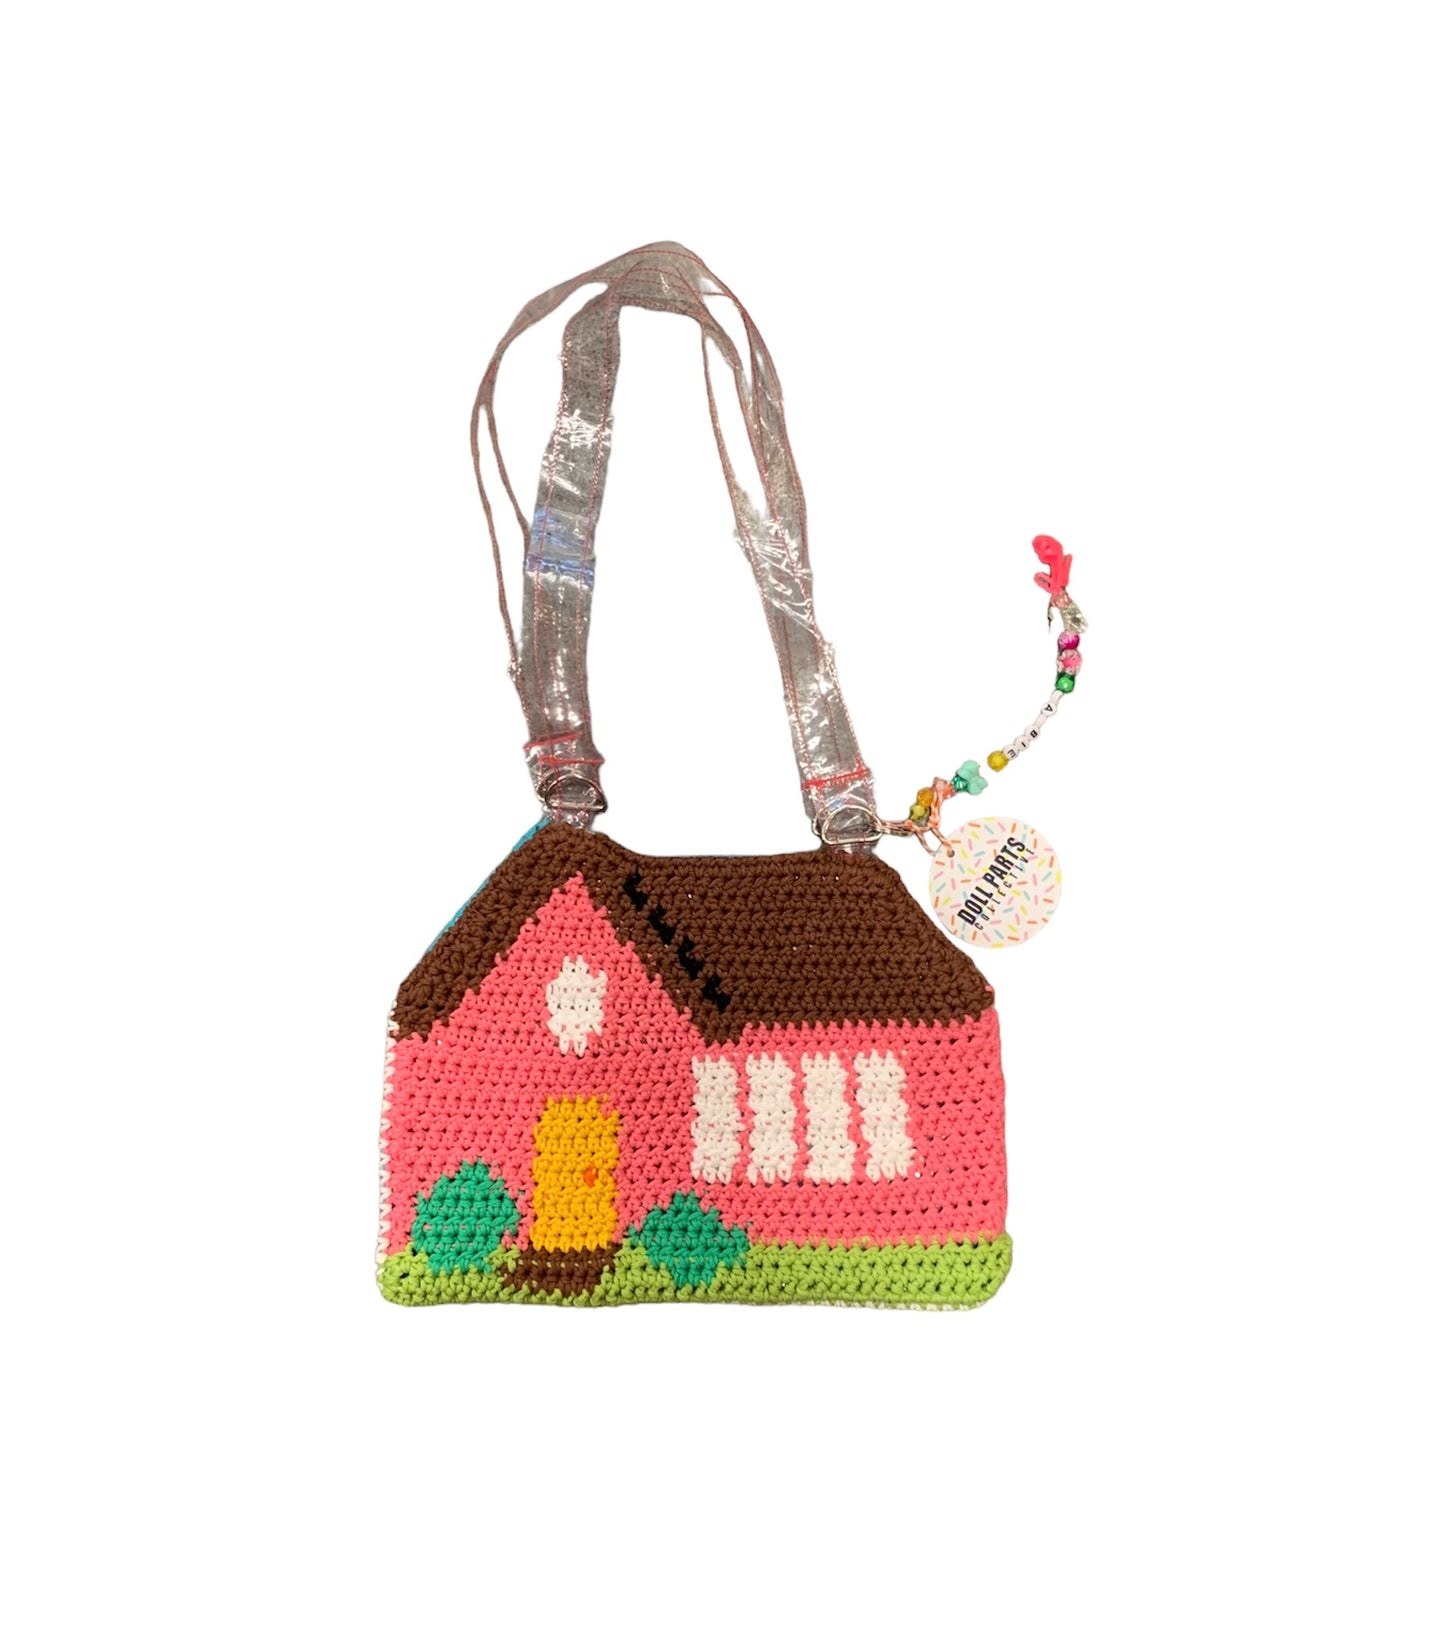 Handmade Dream House Crochet Bag by Soft Stella